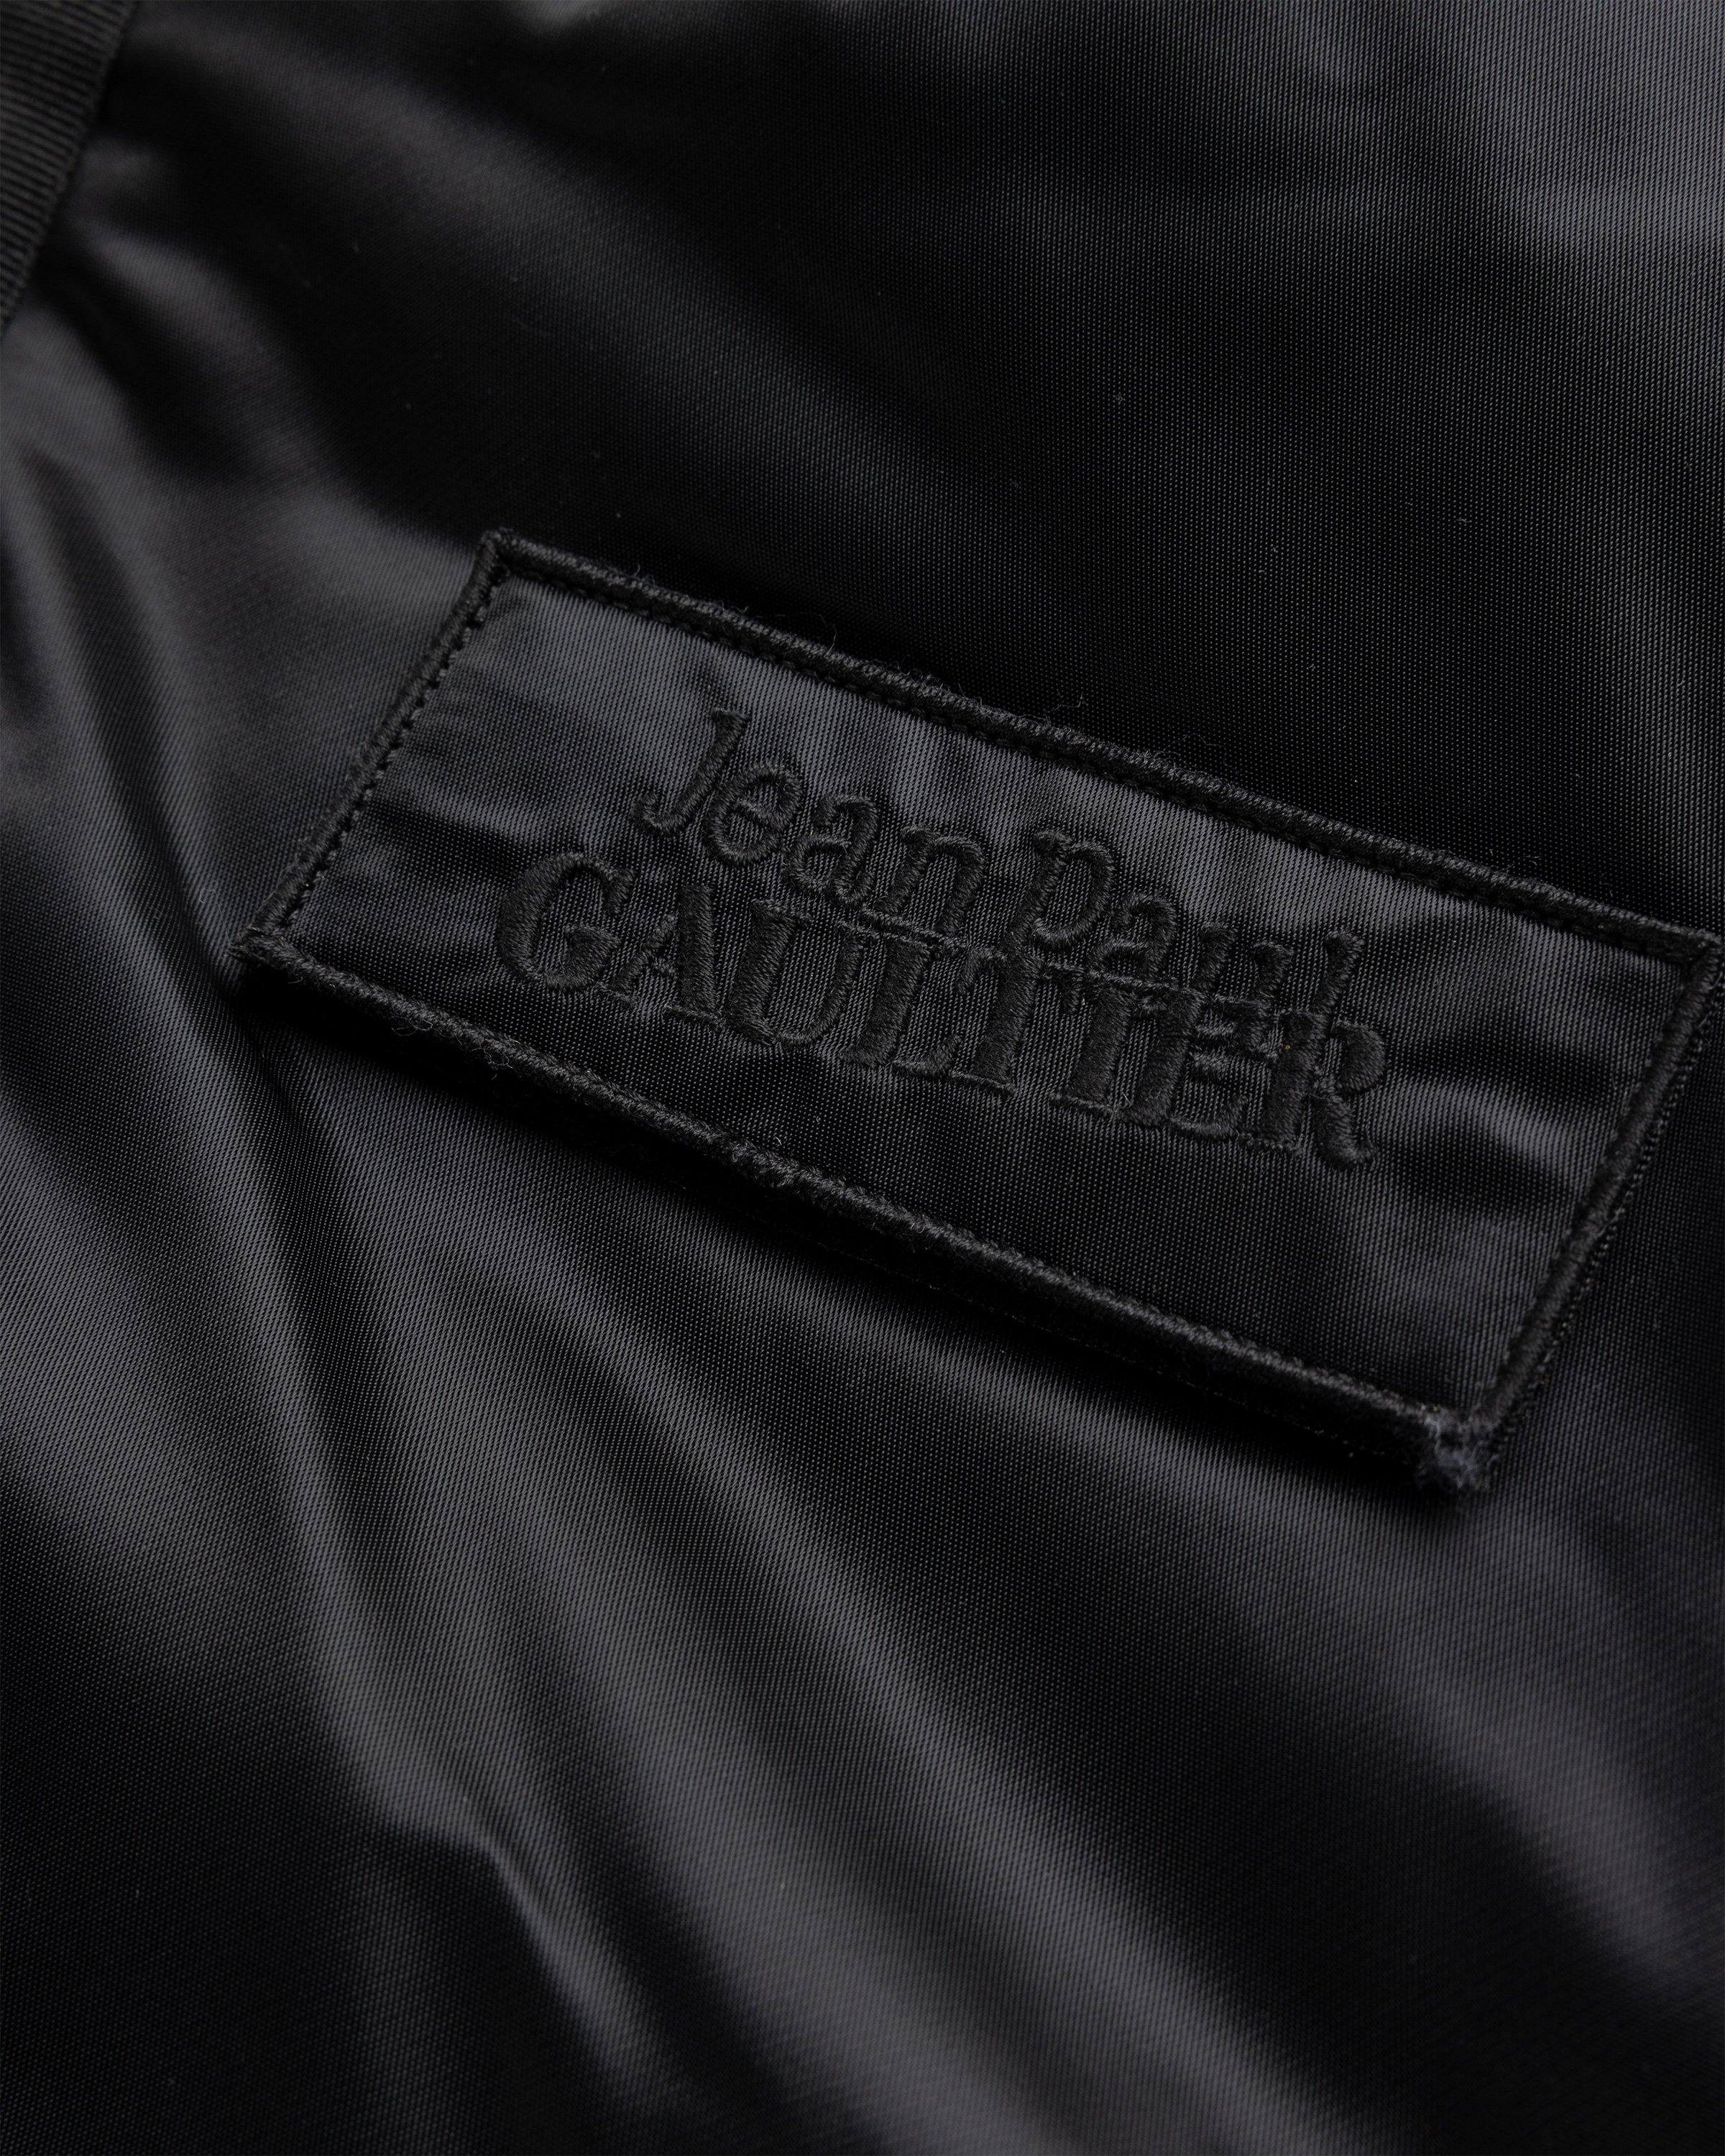 Jean Paul Gaultier - Oversized Satin Bomber Jacket Black/Grey - Clothing - Black - Image 6